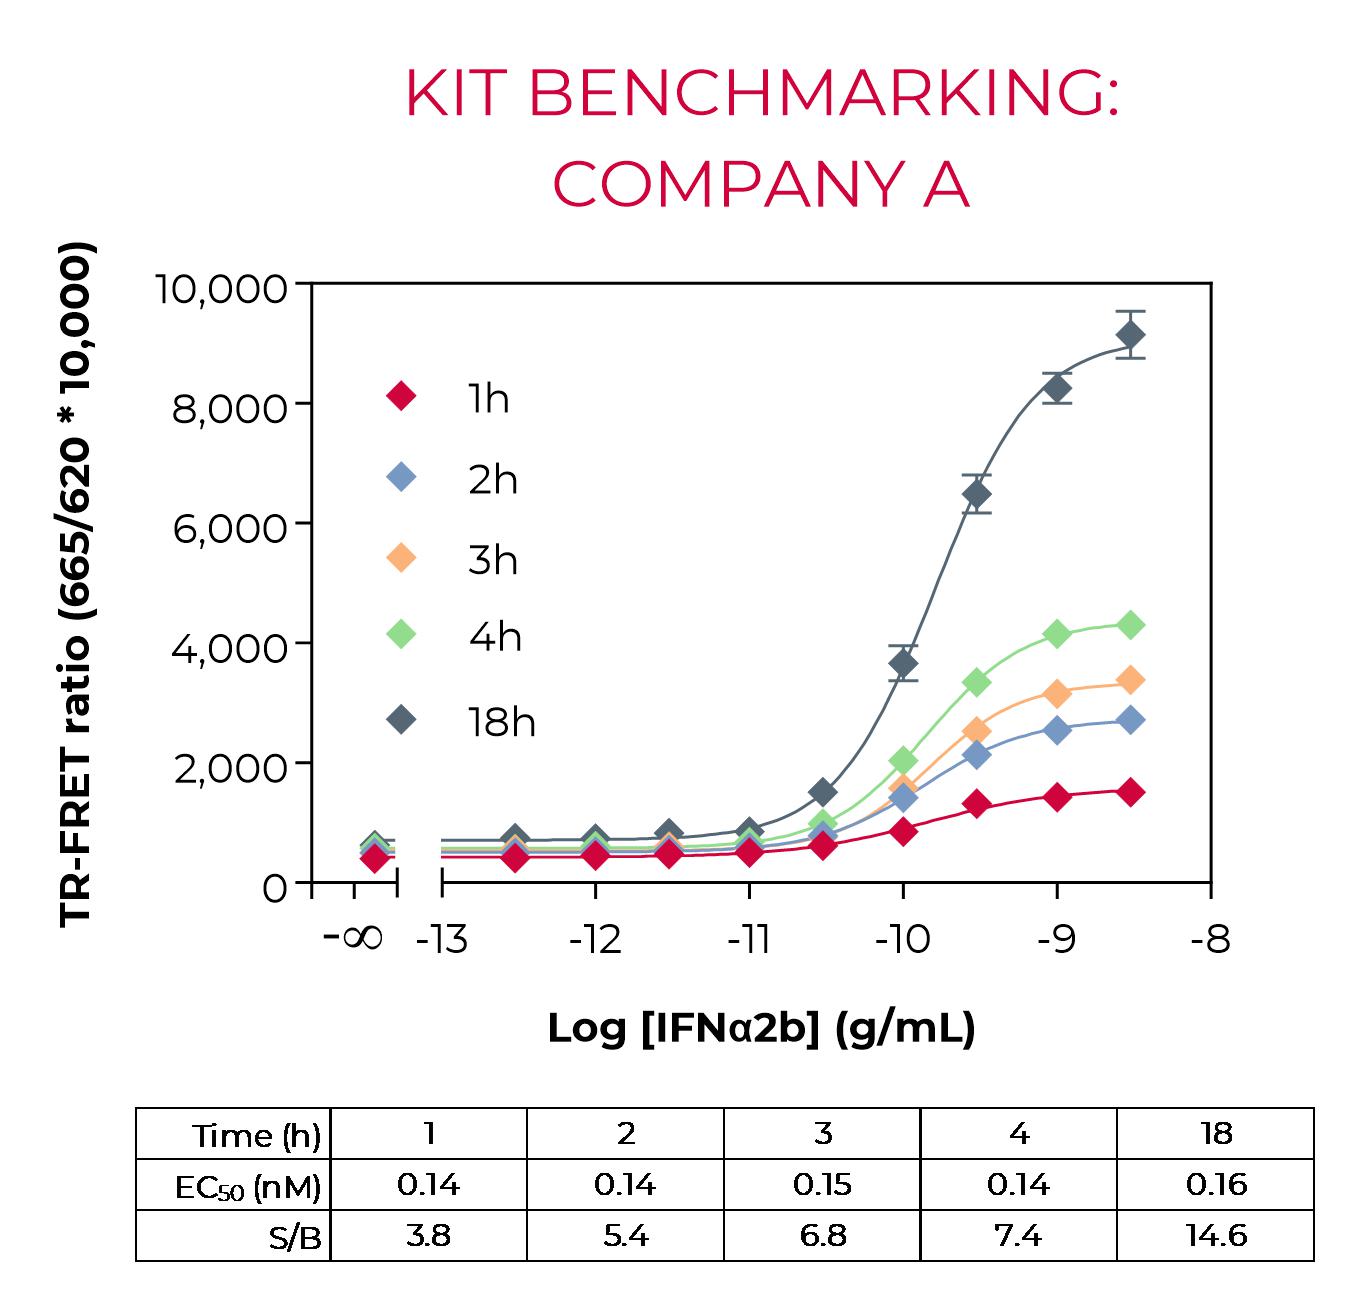 Phospho-STAT3 benchmarking-Company A